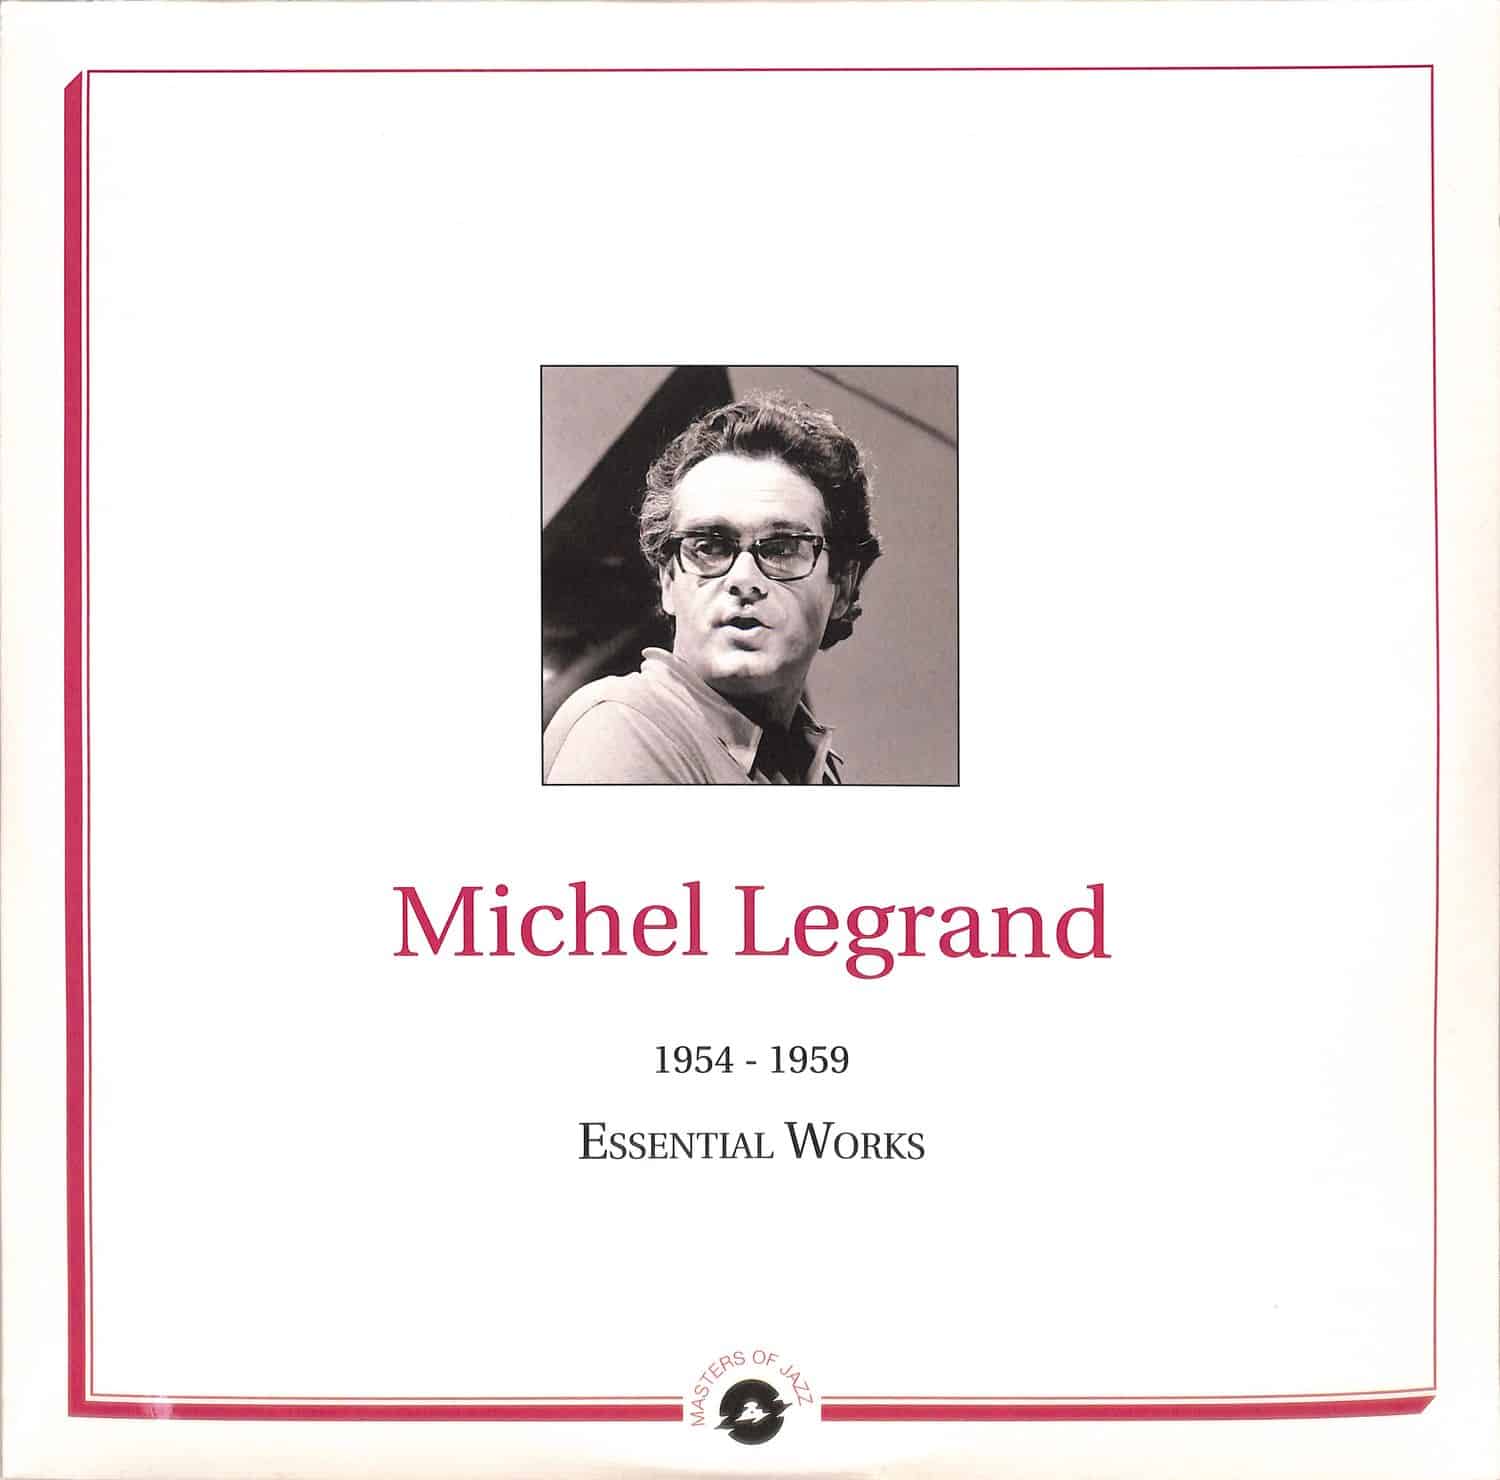 Michel Legrand - ESSENTIAL WORKS: 1954-1959 